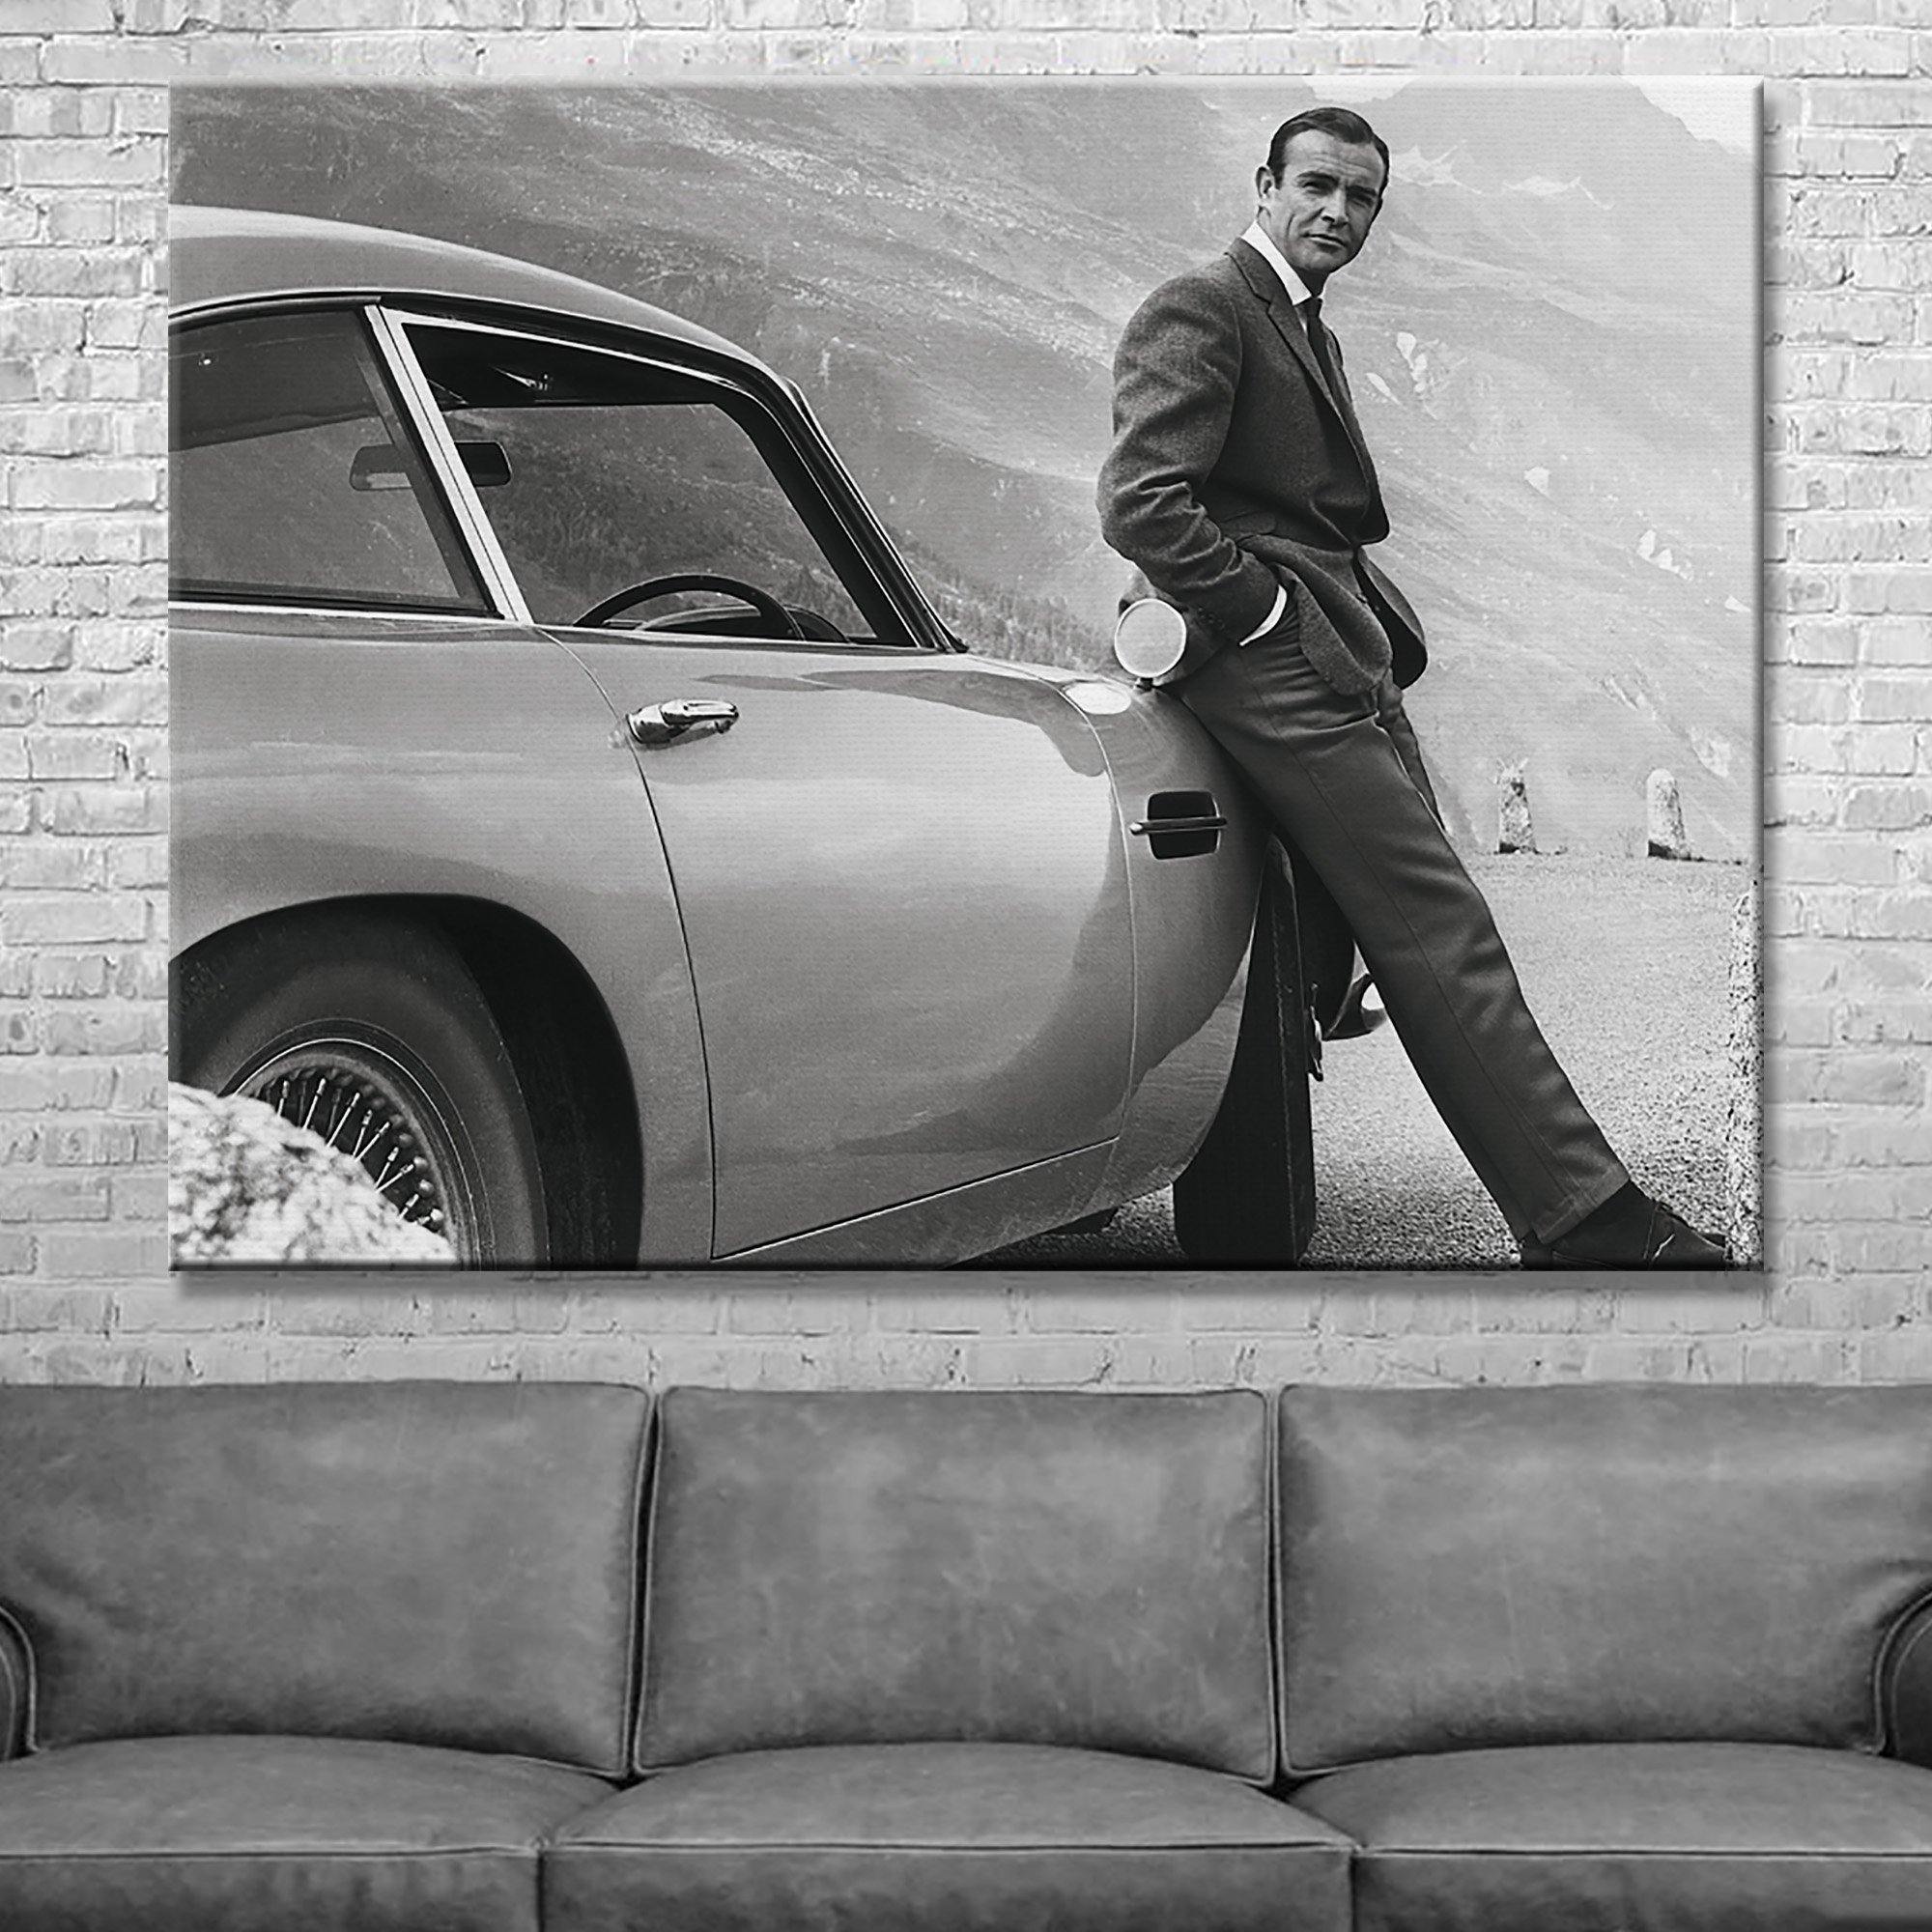 James Bond Sean Connery Canvas Wall Art Print - SharpWallArts